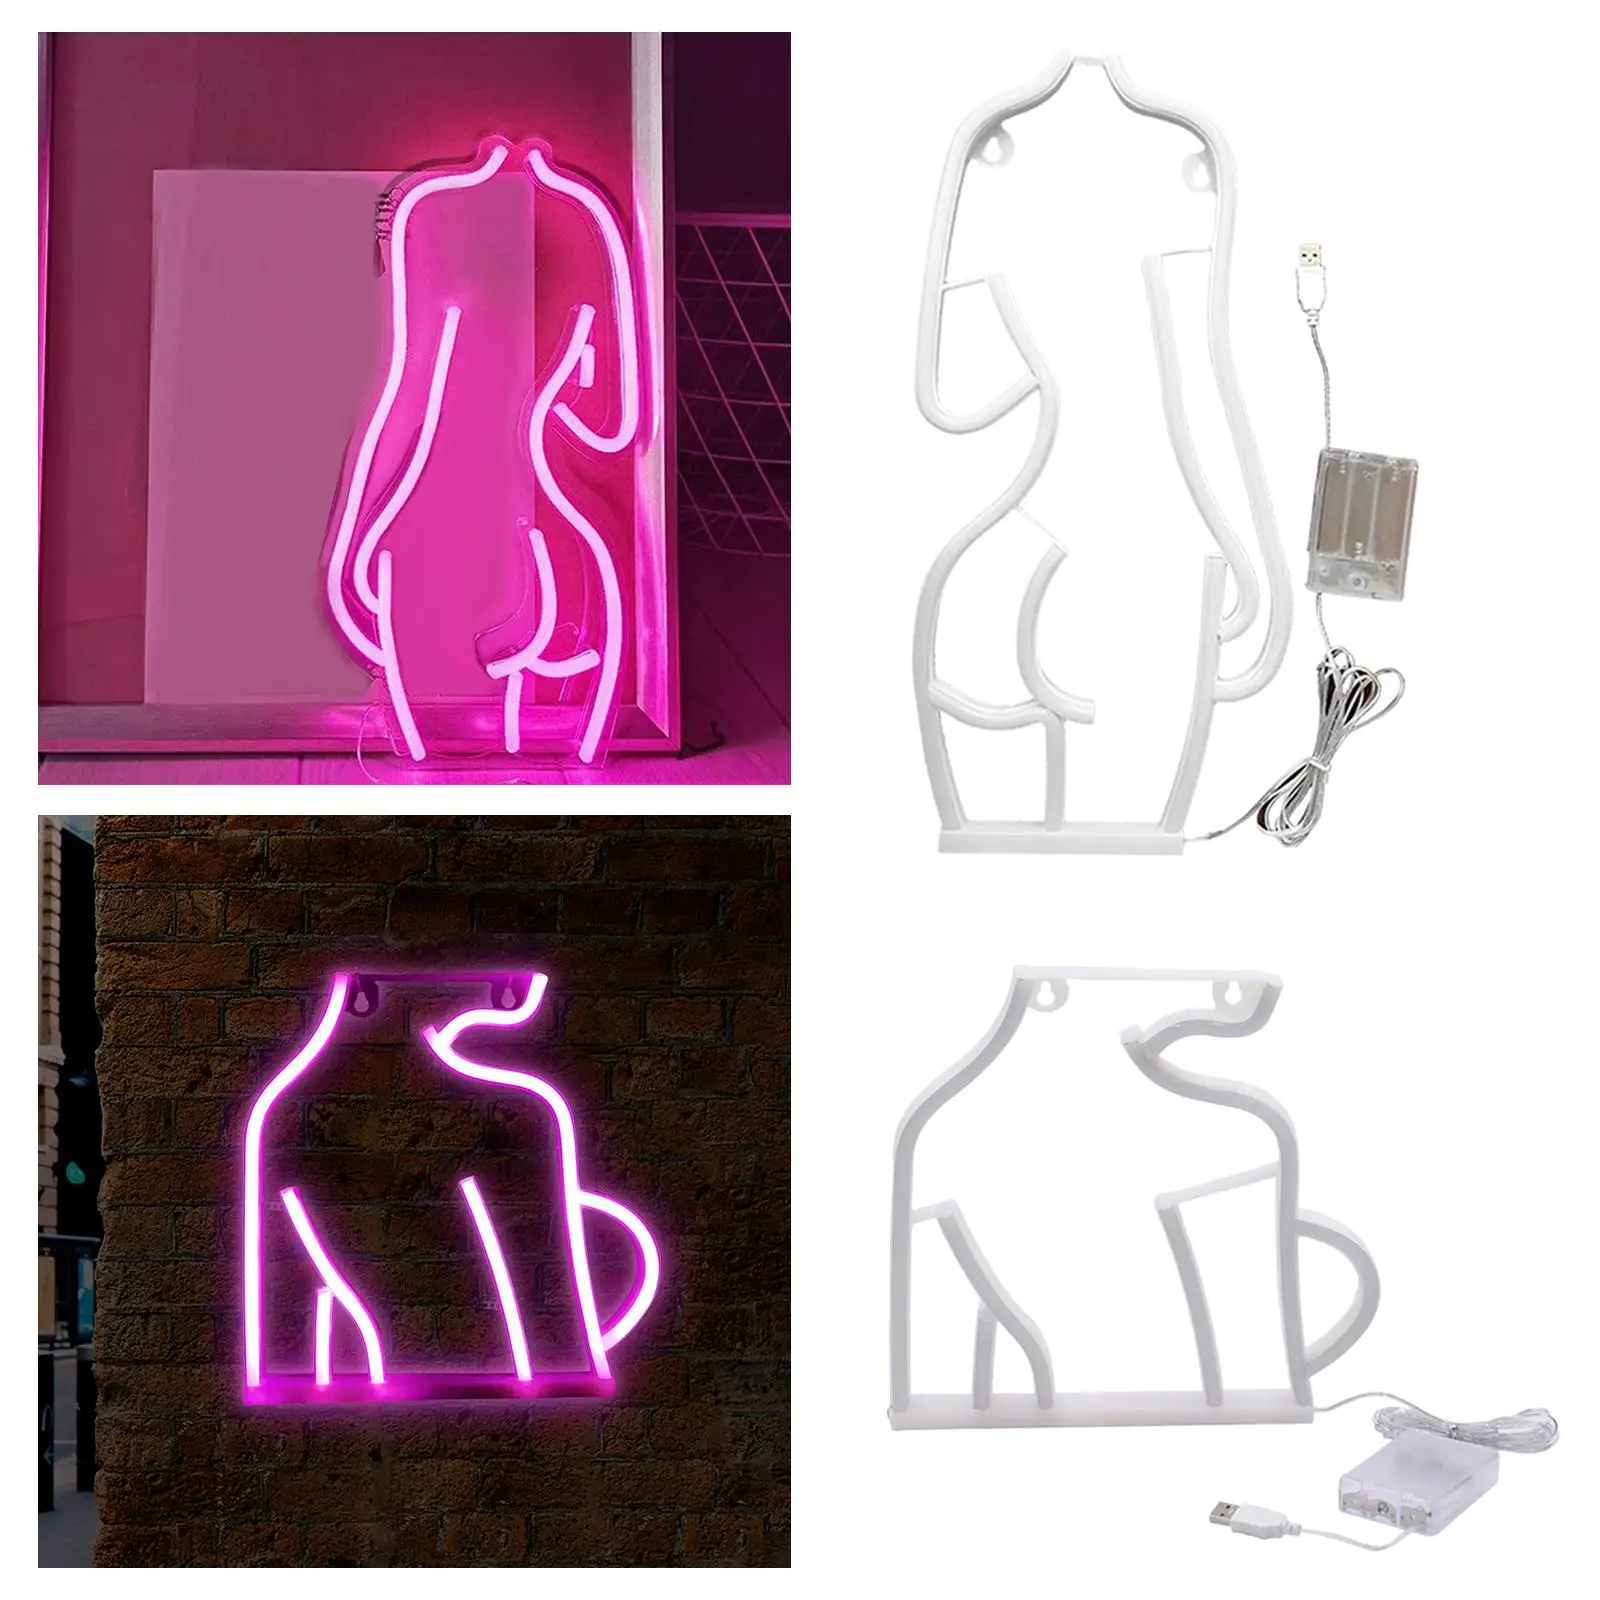 Lady Back Girls Woman Body Neon Sign Lamp Night Light for Club Bar Pub